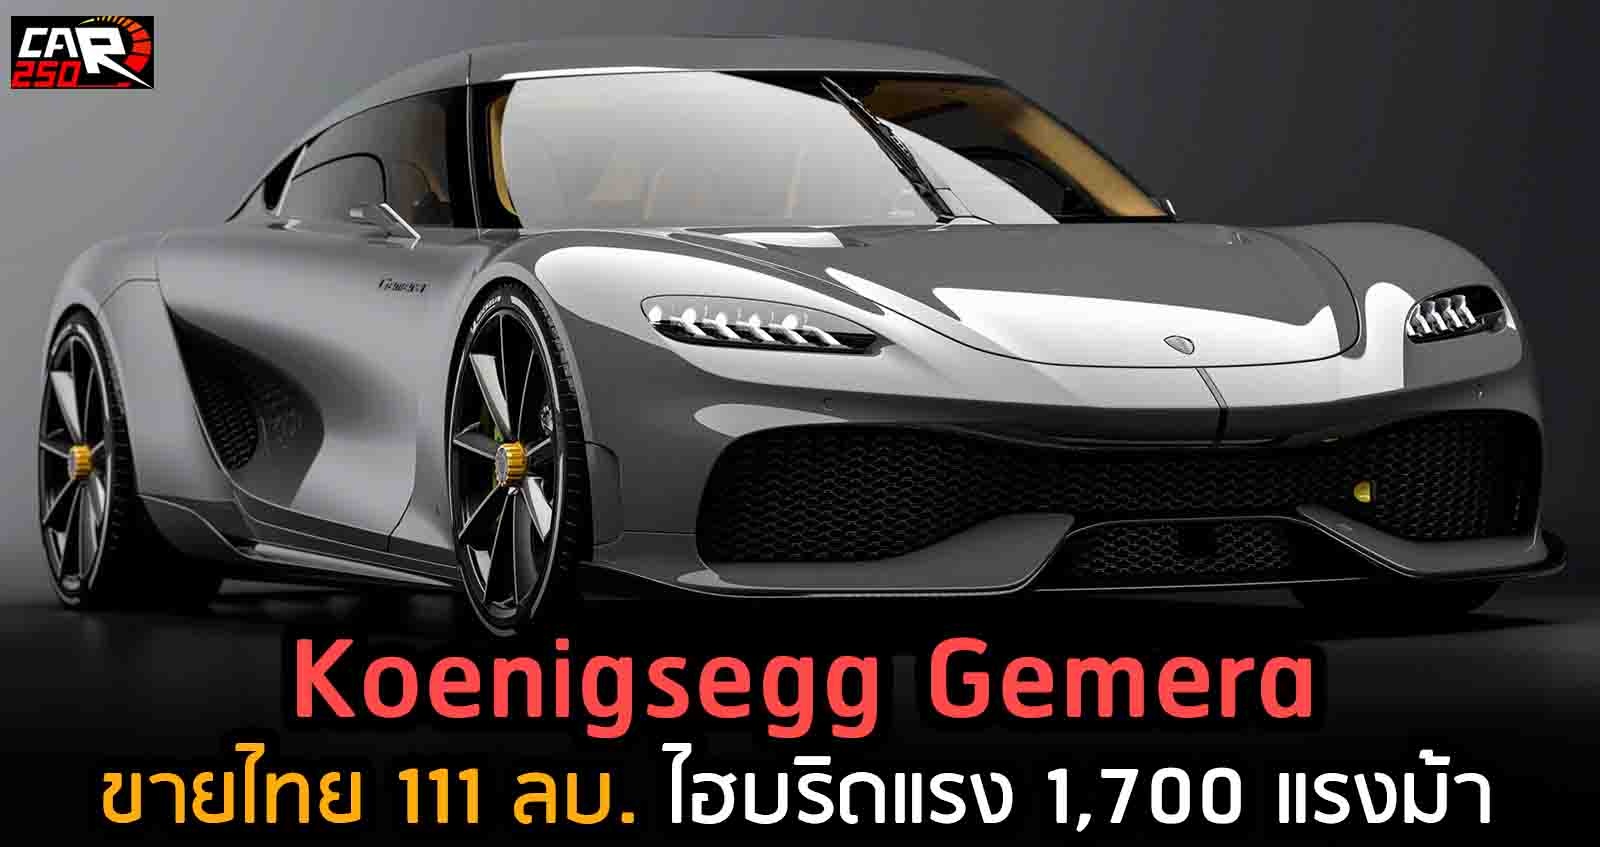 Koenigsegg Gemera เปิดขายไทยราคา 111,098,385 บาท นำเข้า CBU